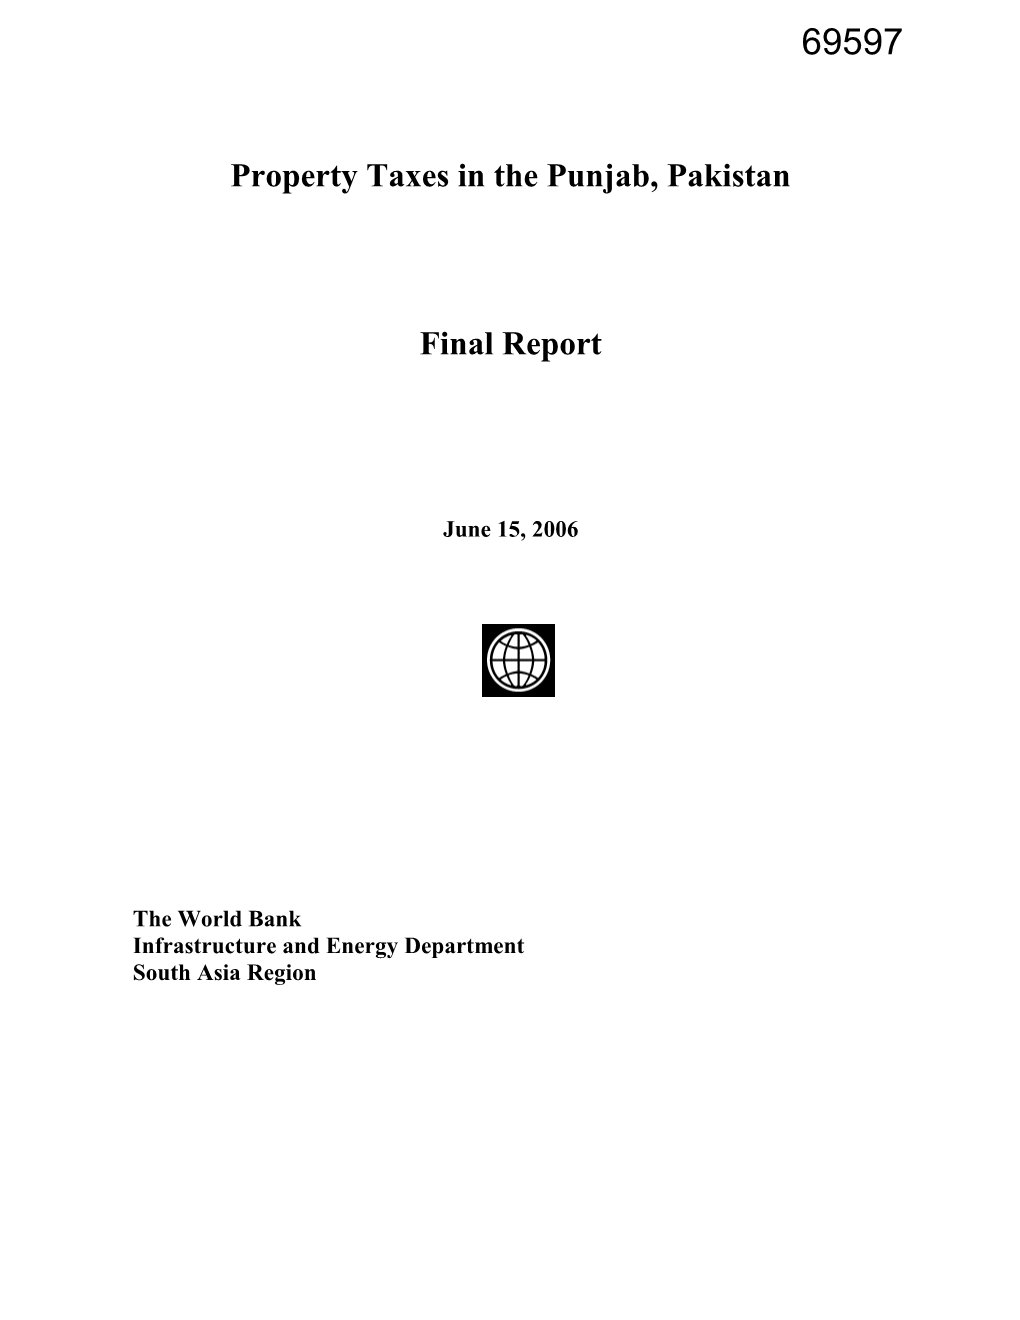 Pakistan: Property Taxation in Punjab